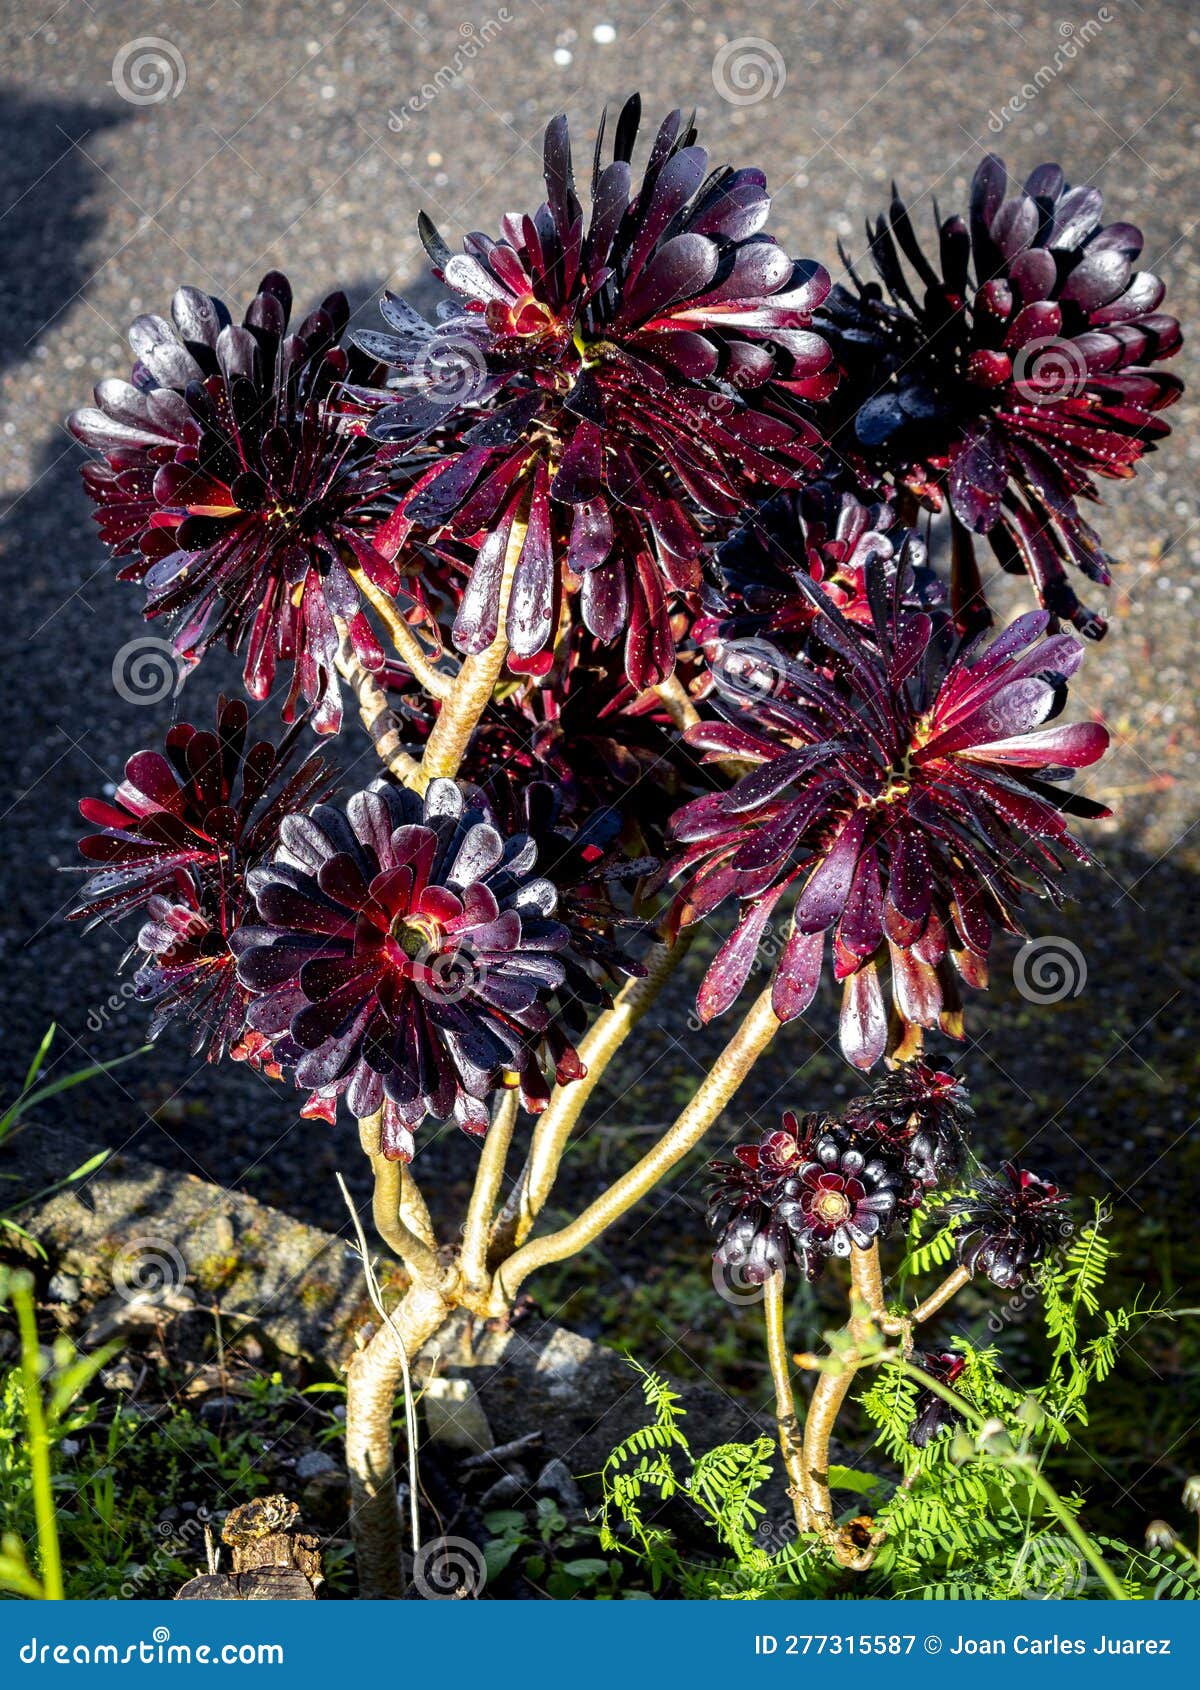 Black Aeonium Arboreum Zwartkop (Black Rose) with Blurred Backgrounf ...